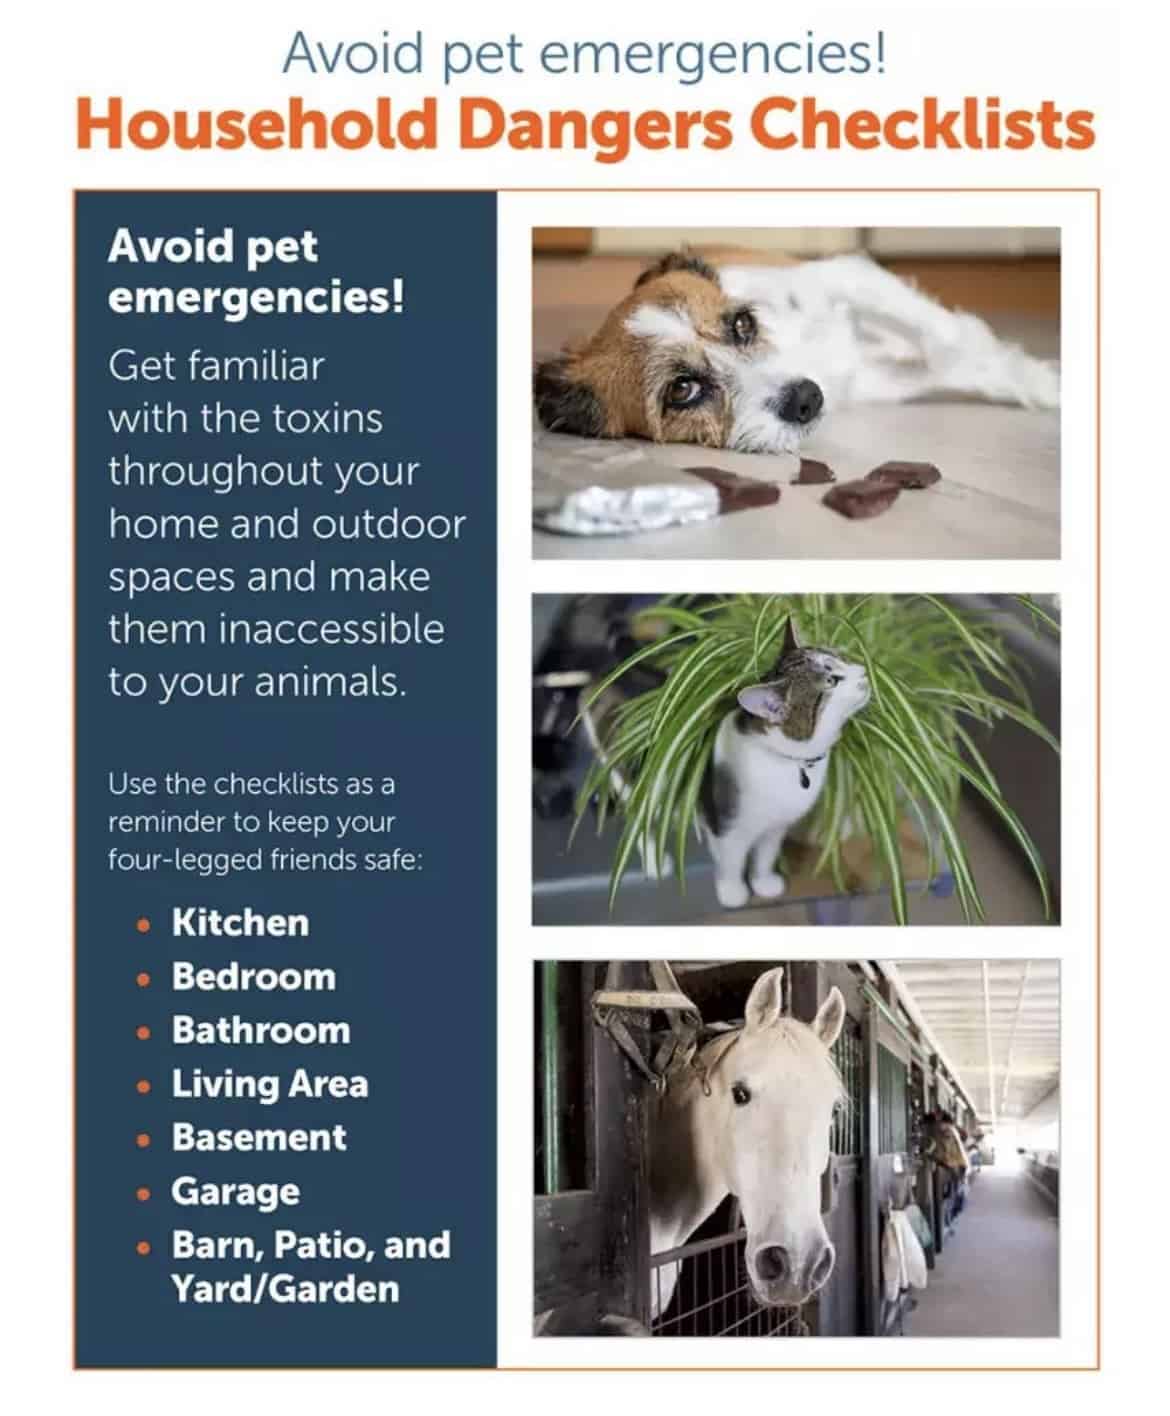 Pet Poison Prevention Month!